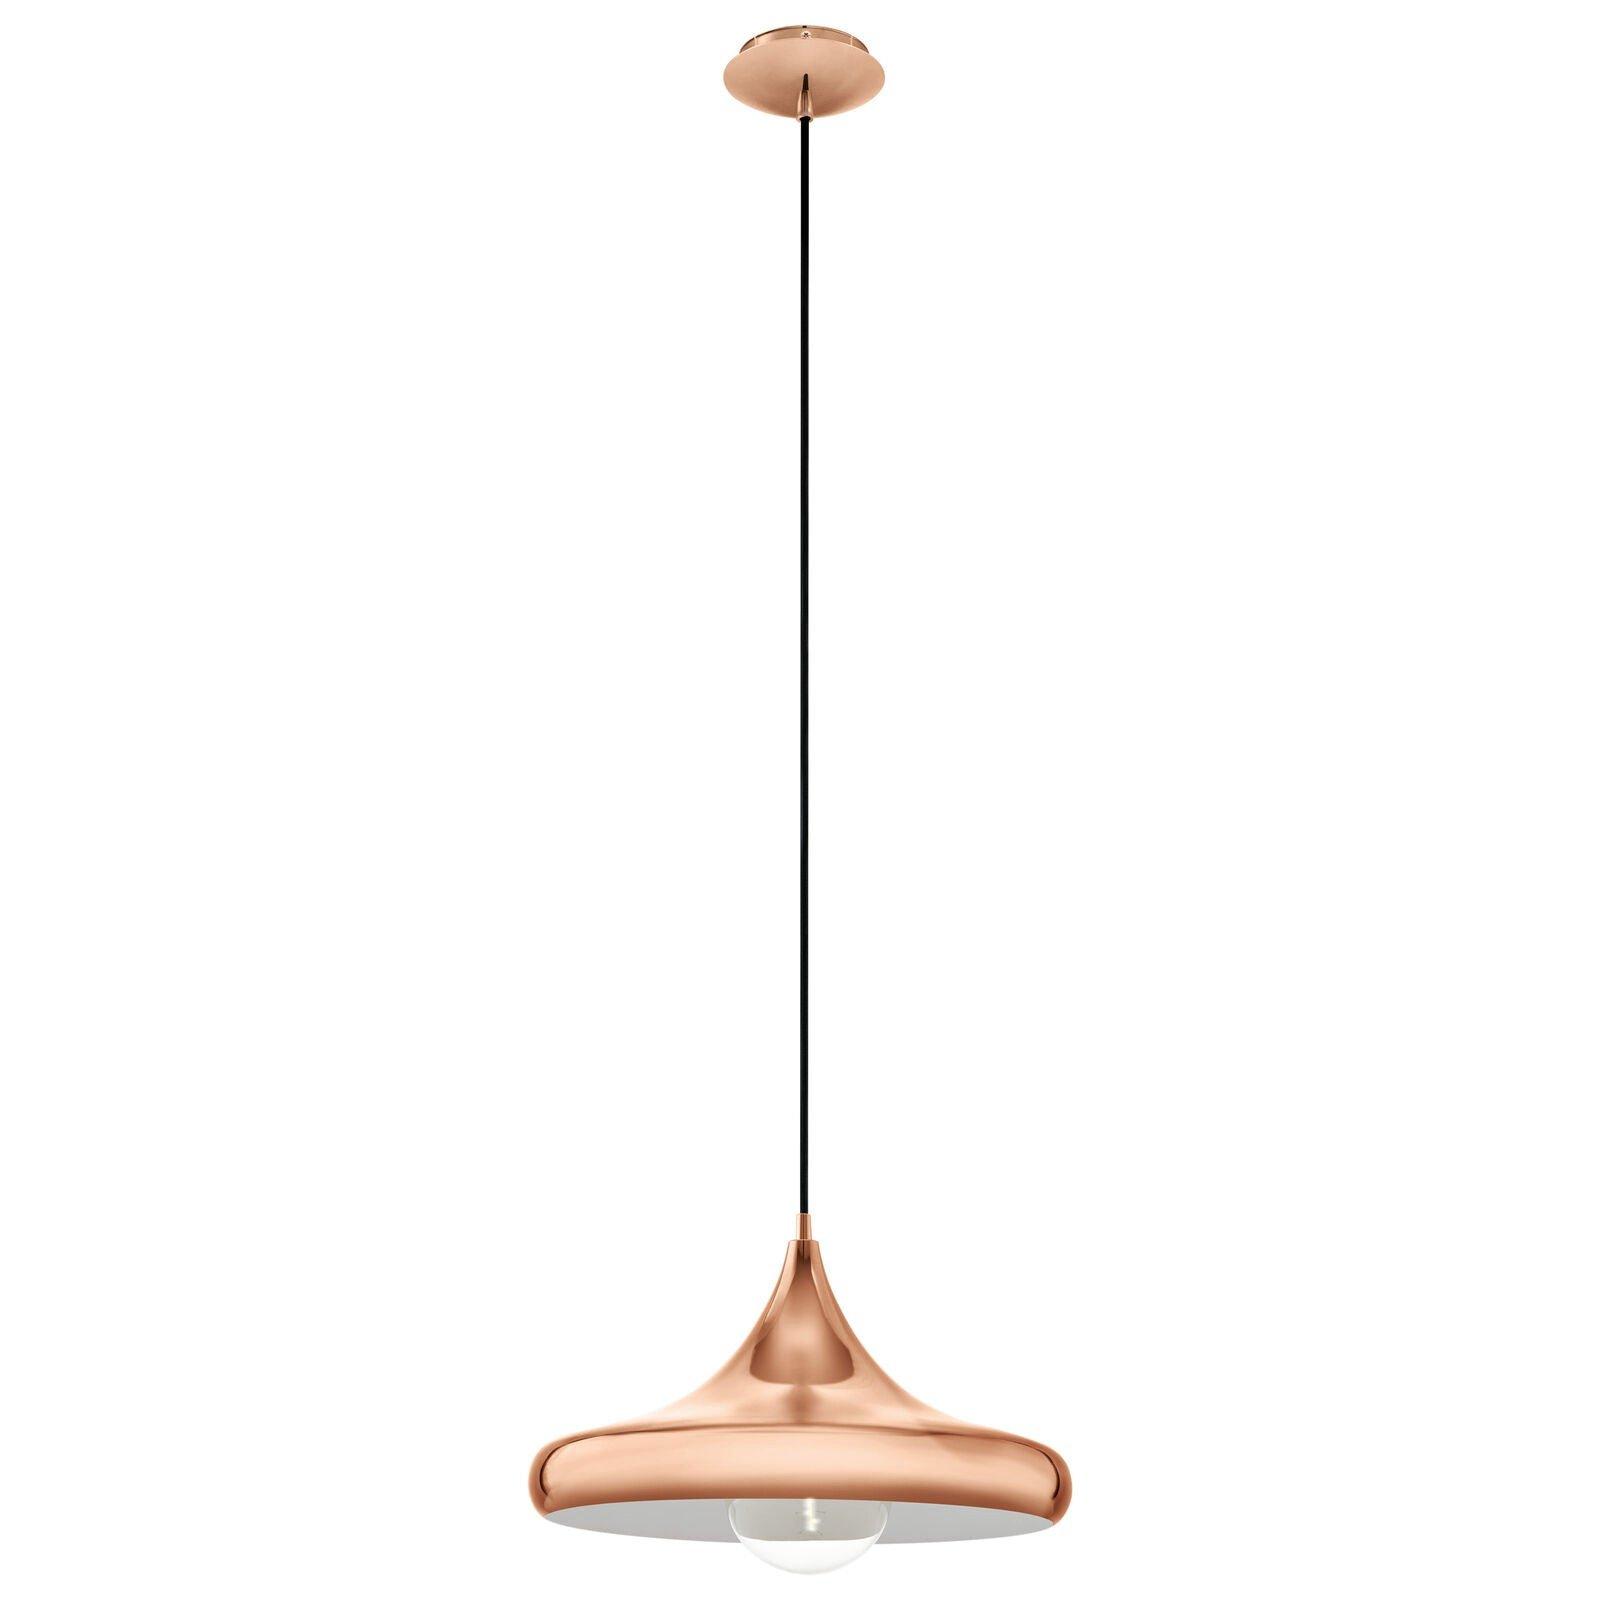 Hanging Ceiling Pendant Light Sleek Copper Shade 1x 60W E27 Hallway Feature